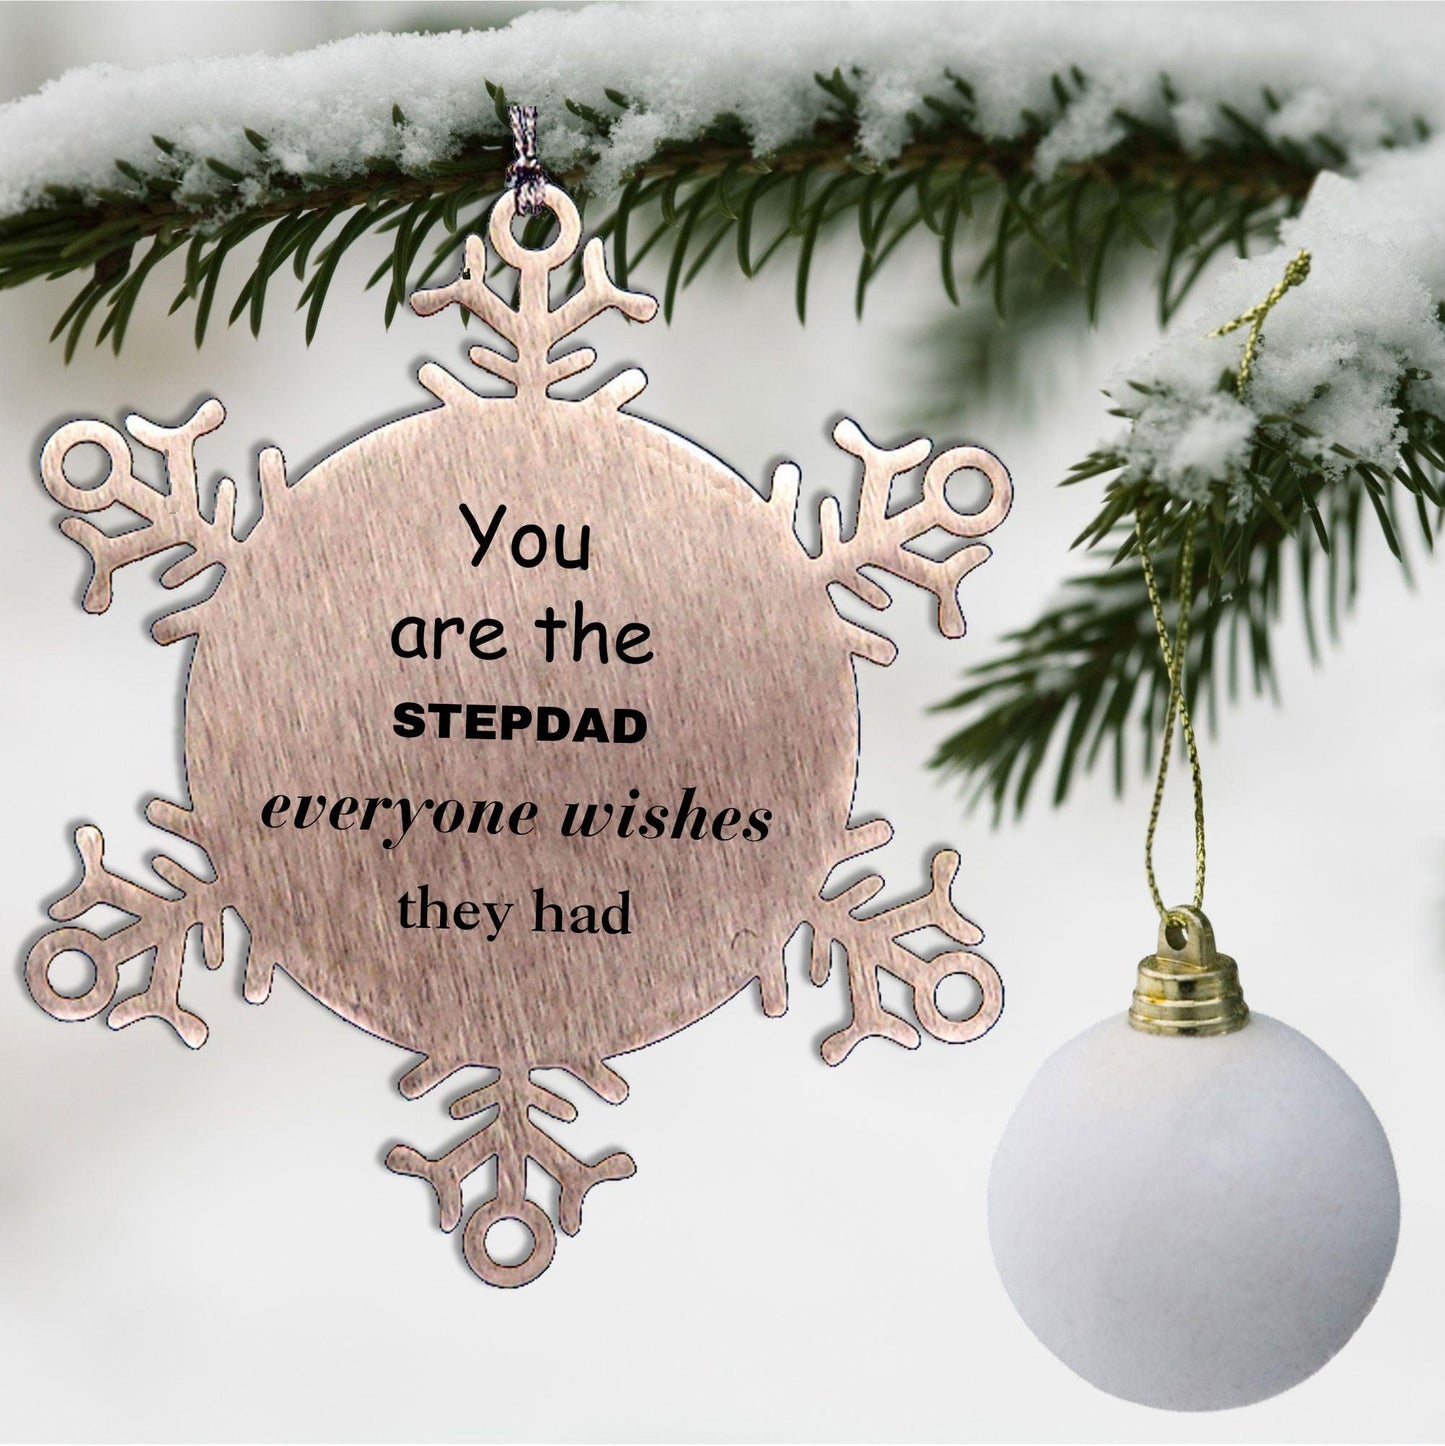 Stepdad Snowflake Ornament, Everyone wishes they had, Inspirational Ornament For Stepdad, Stepdad Gifts, Birthday Christmas Unique Gifts For Stepdad - Mallard Moon Gift Shop